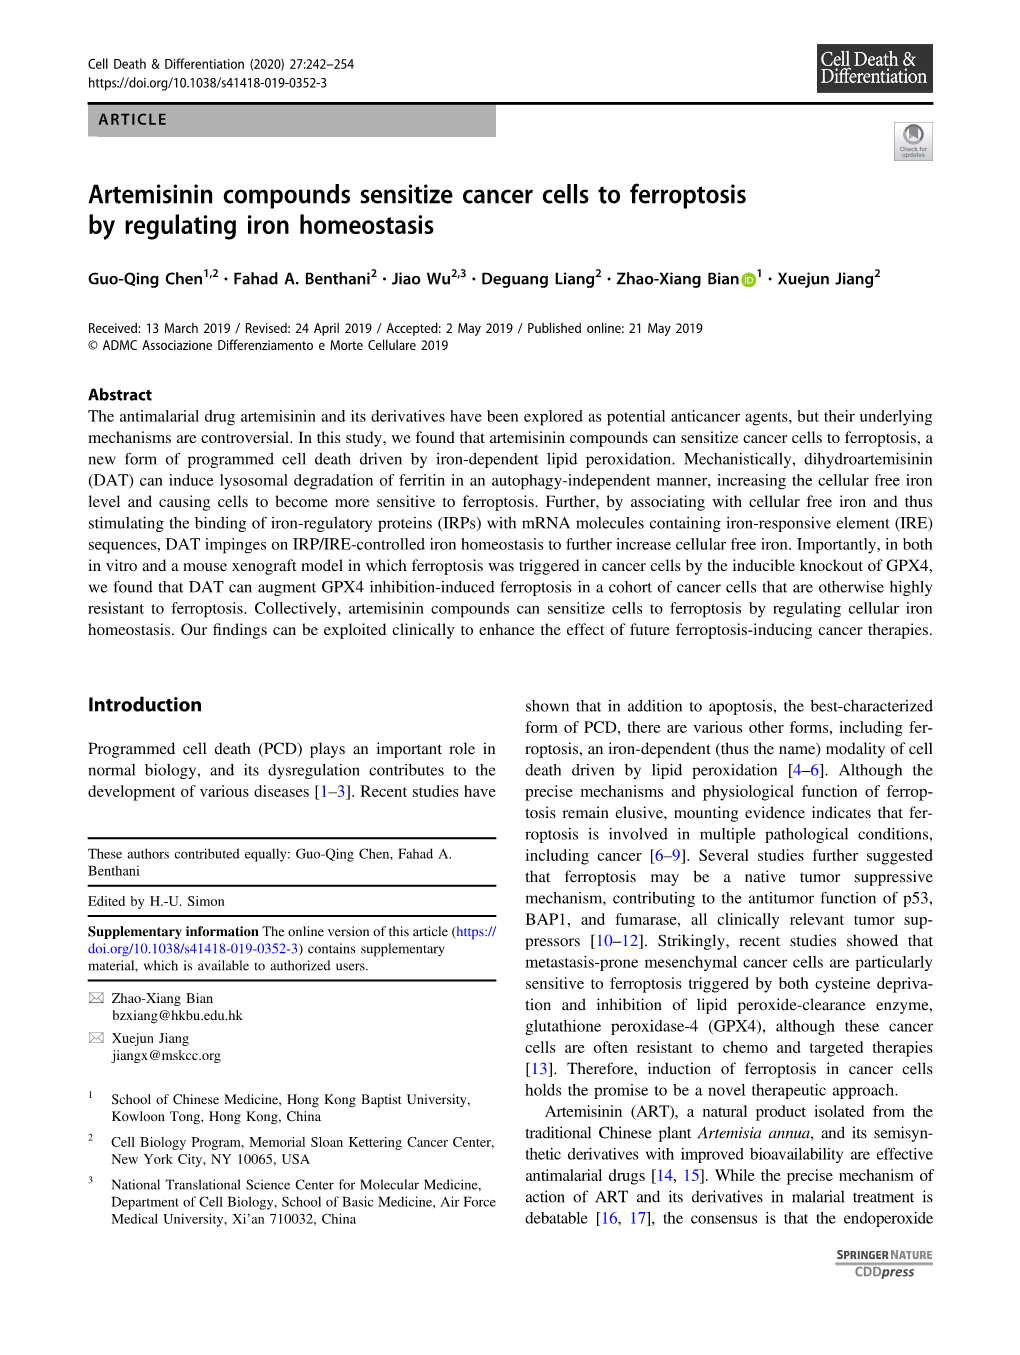 Artemisinin Compounds Sensitize Cancer Cells to Ferroptosis by Regulating Iron Homeostasis